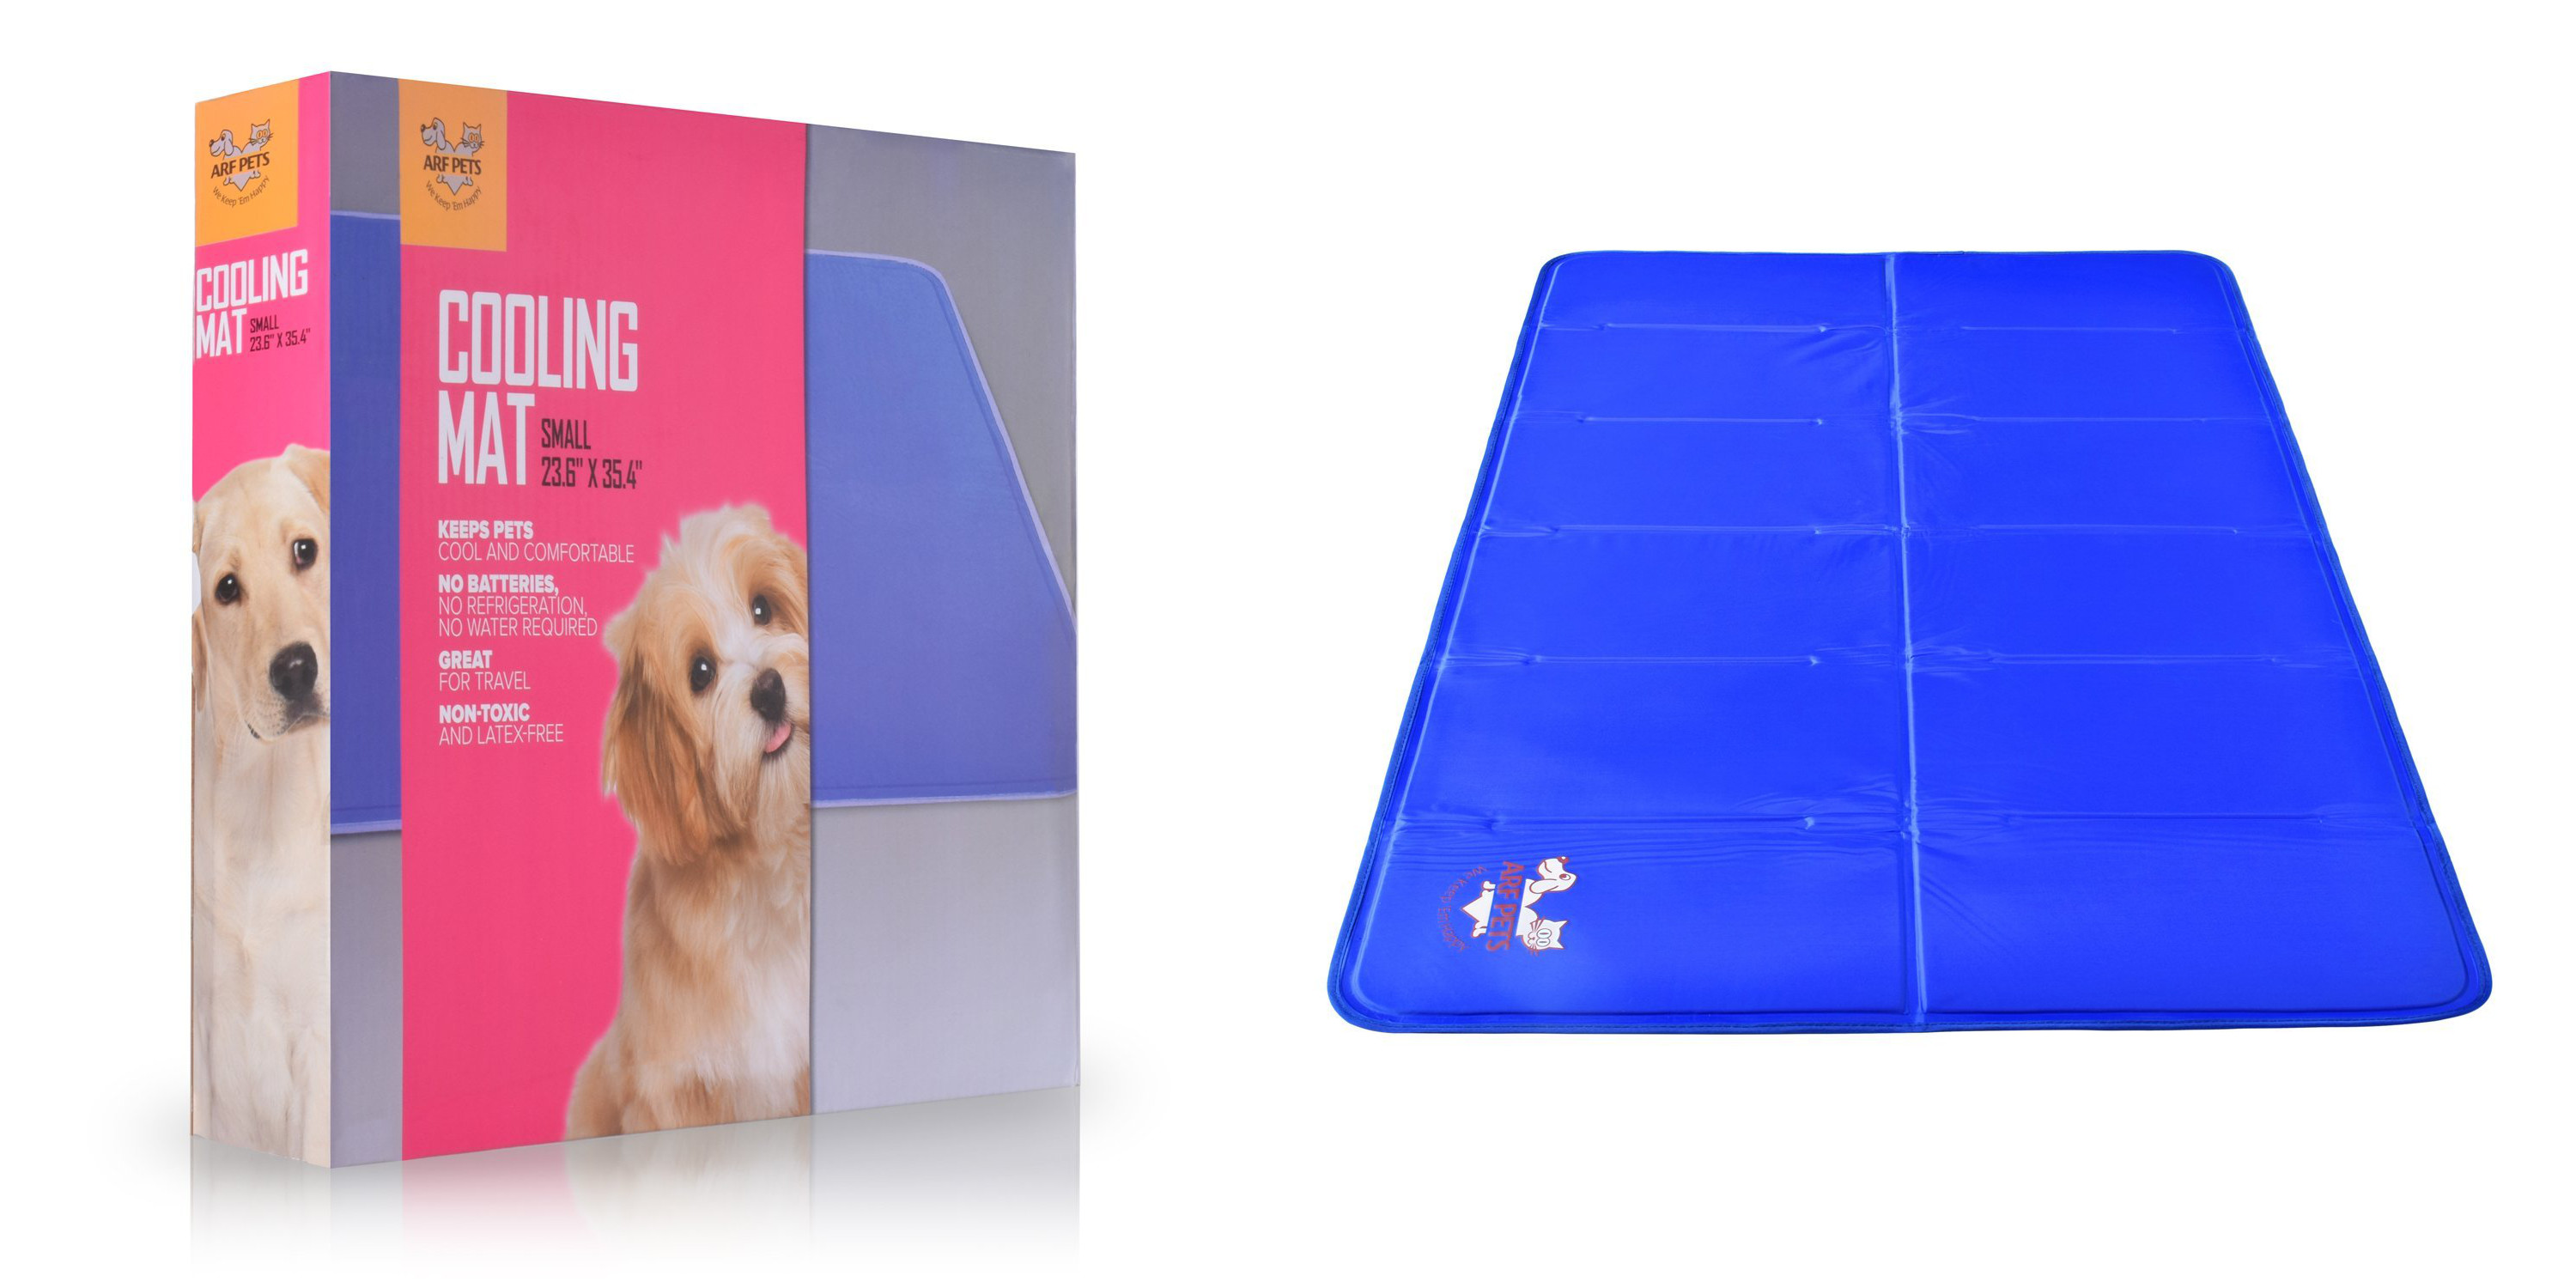 Self-Cooling Solid Gel Pad – Arf Pets